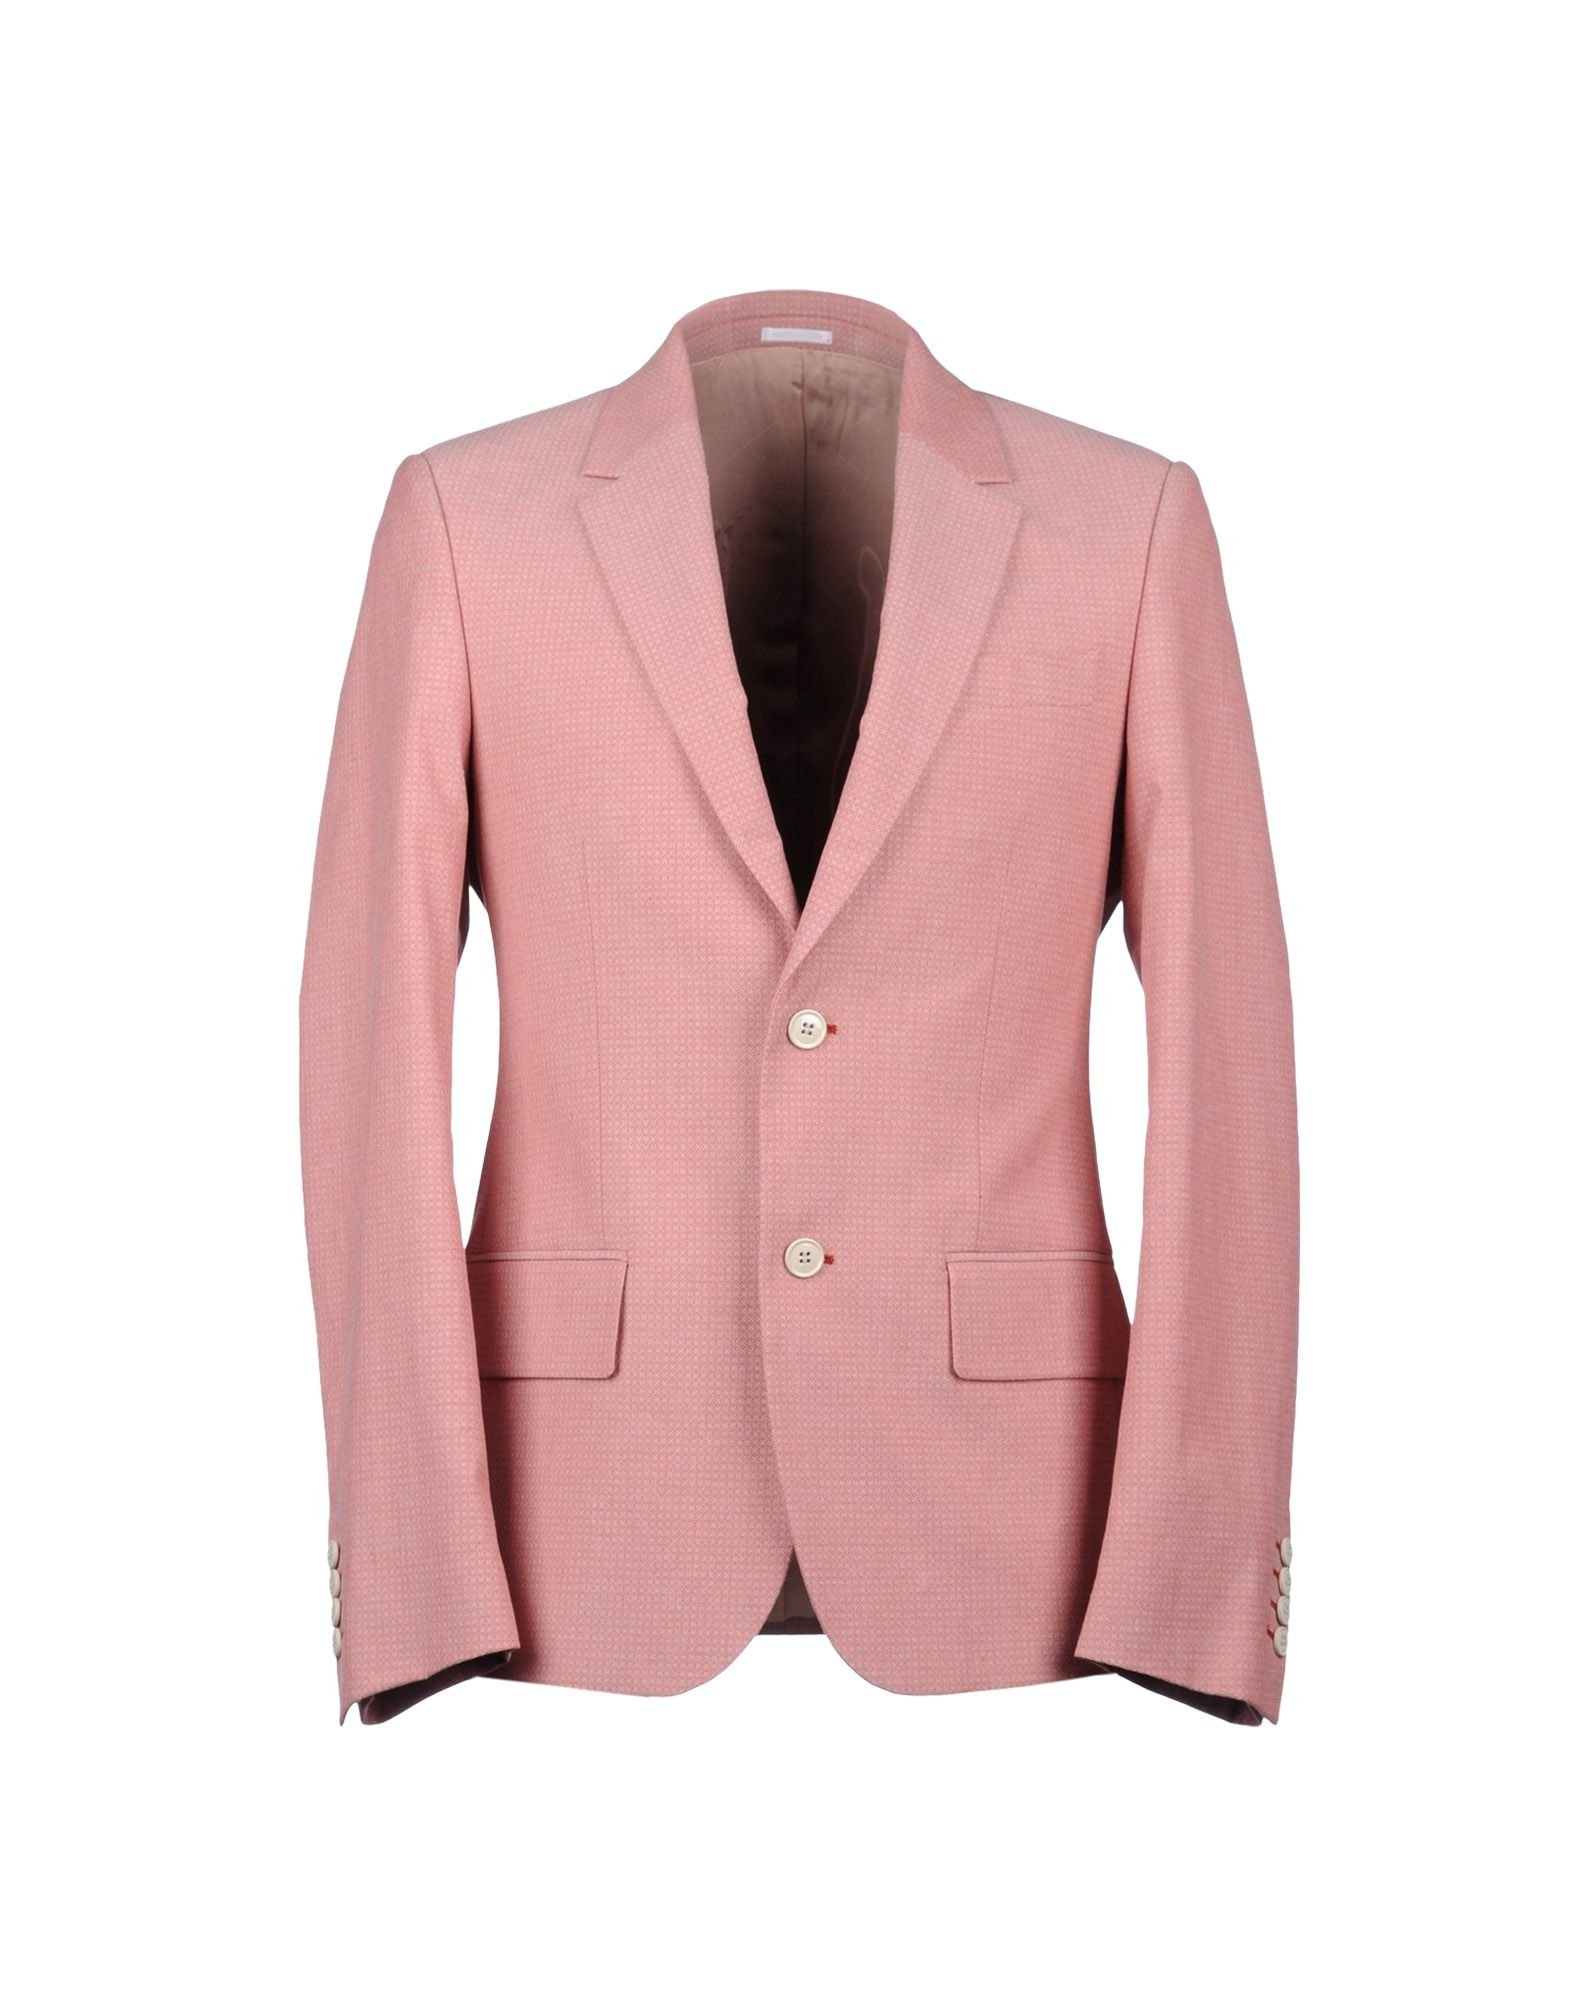 Alexander mcqueen Blazer in Pink for Men | Lyst